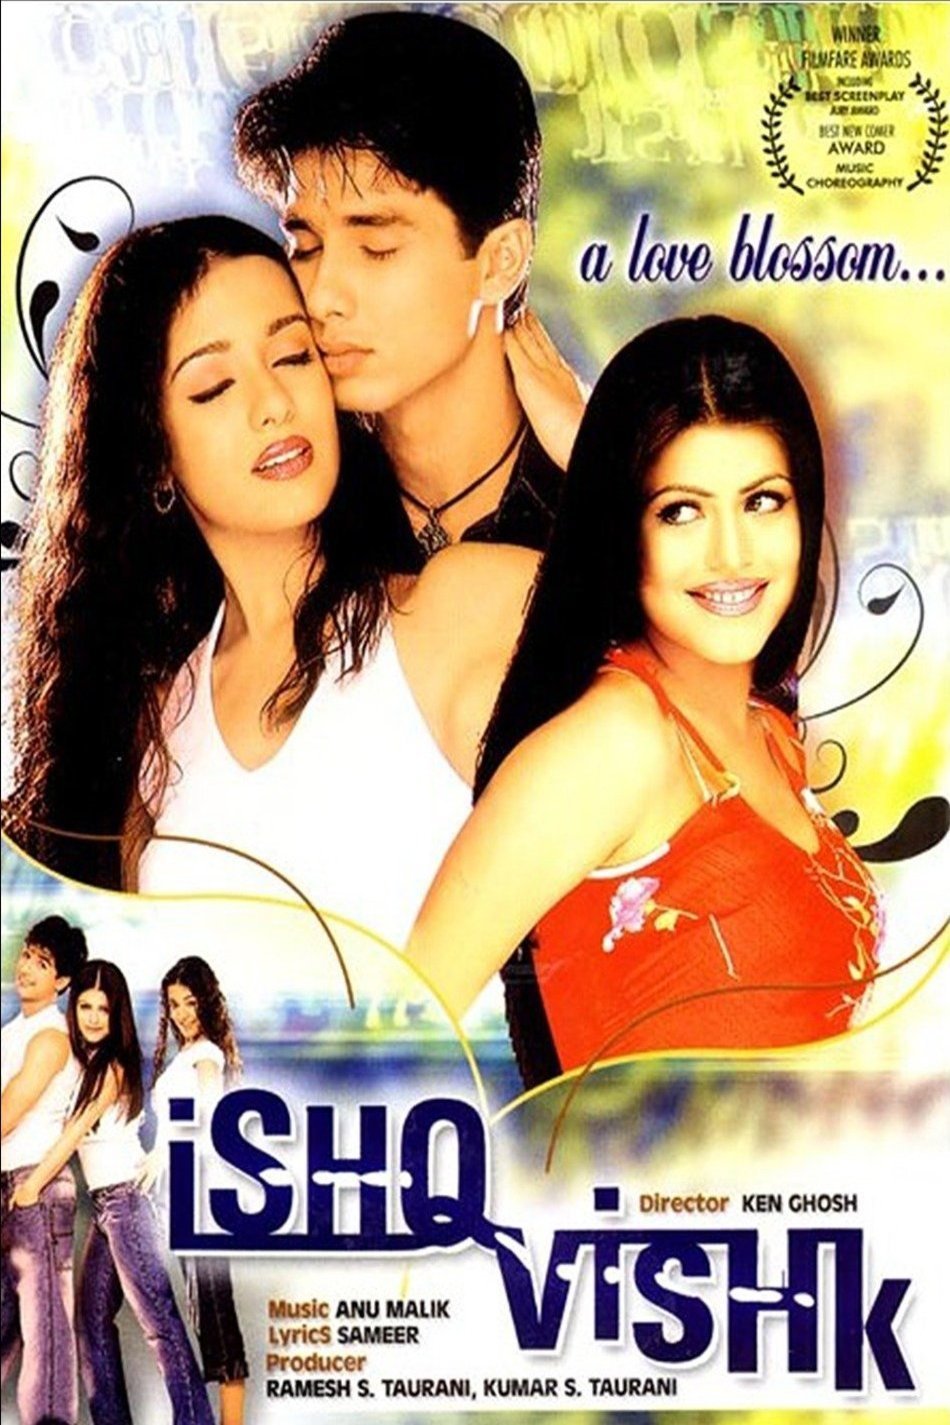 L'affiche originale du film Ishq Vishk en Hindi